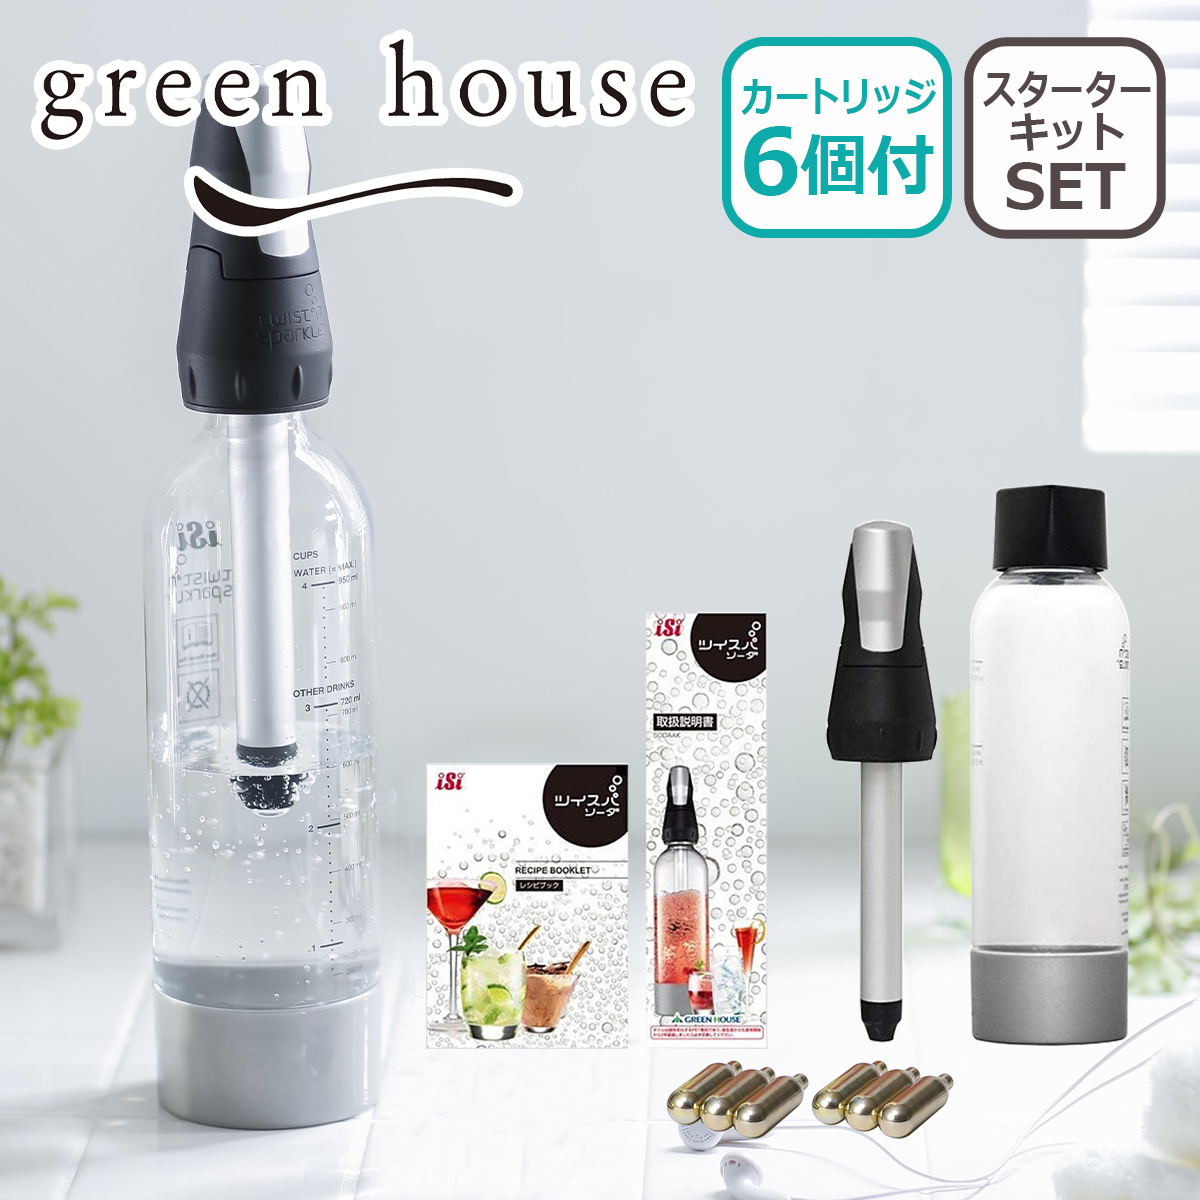 GREEN HOUSE ソーダマシン ツイスパソーダ スターターキット2021 